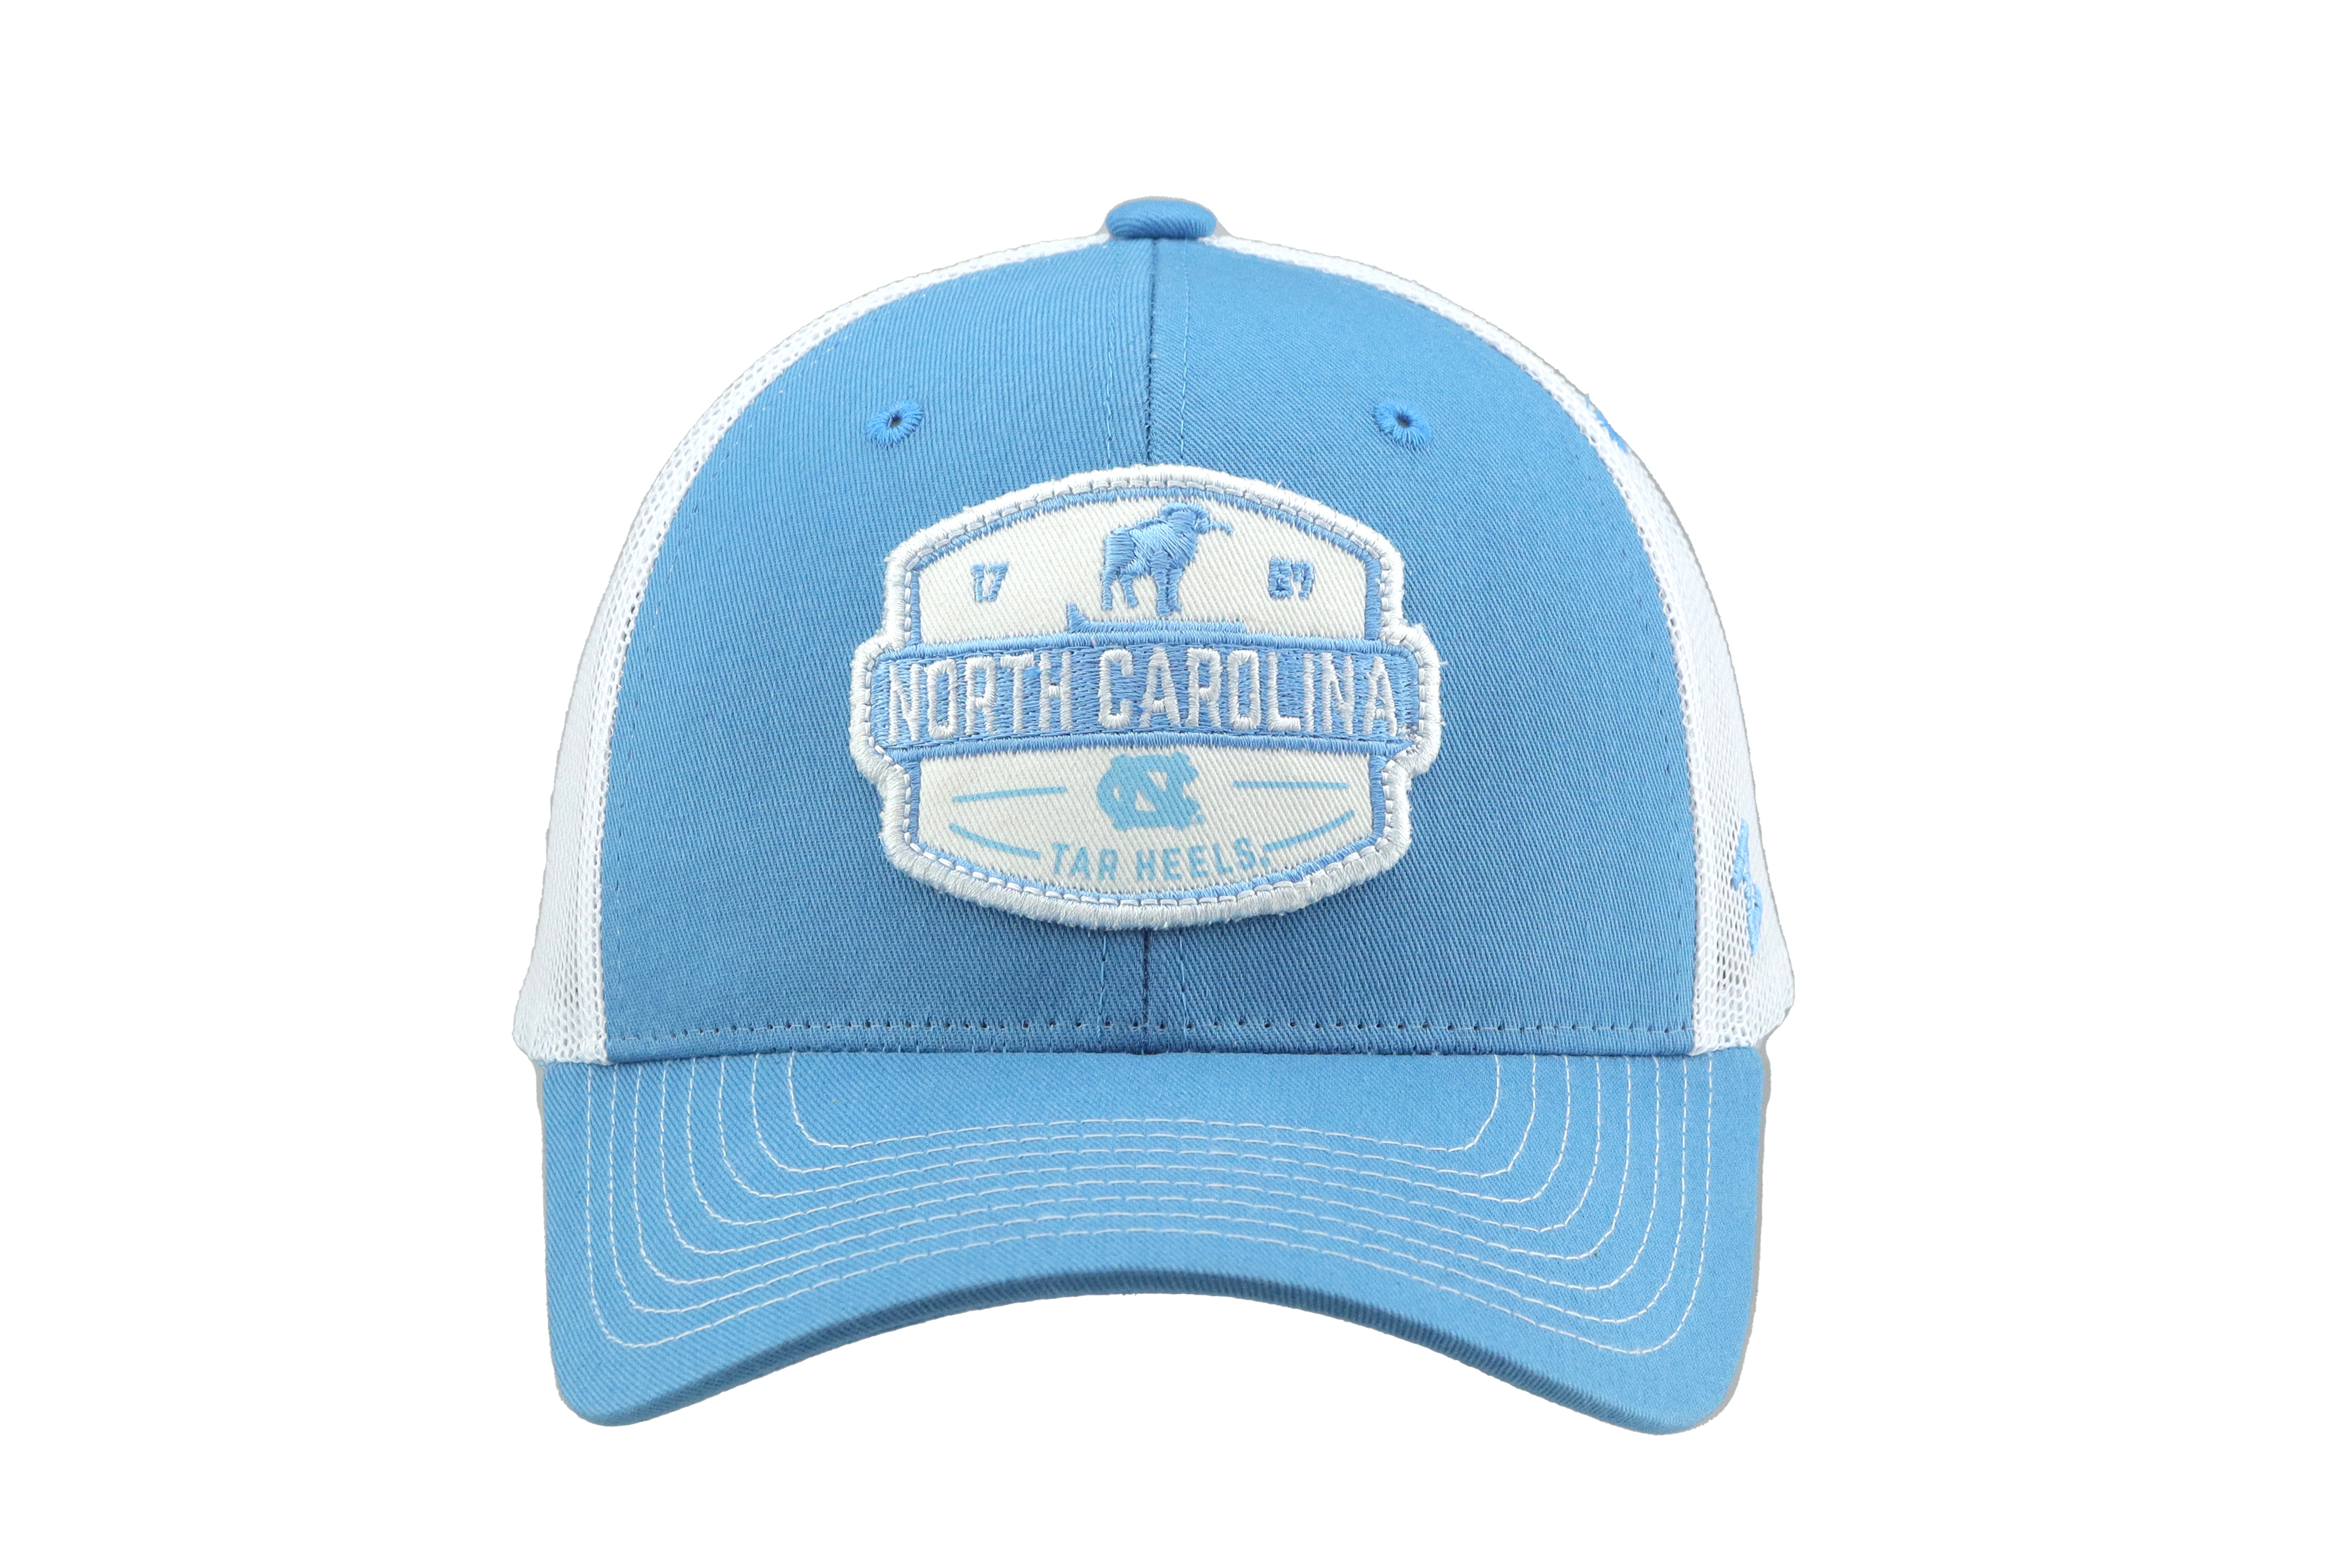 North Carolina Tar Heel Embroidered Hat